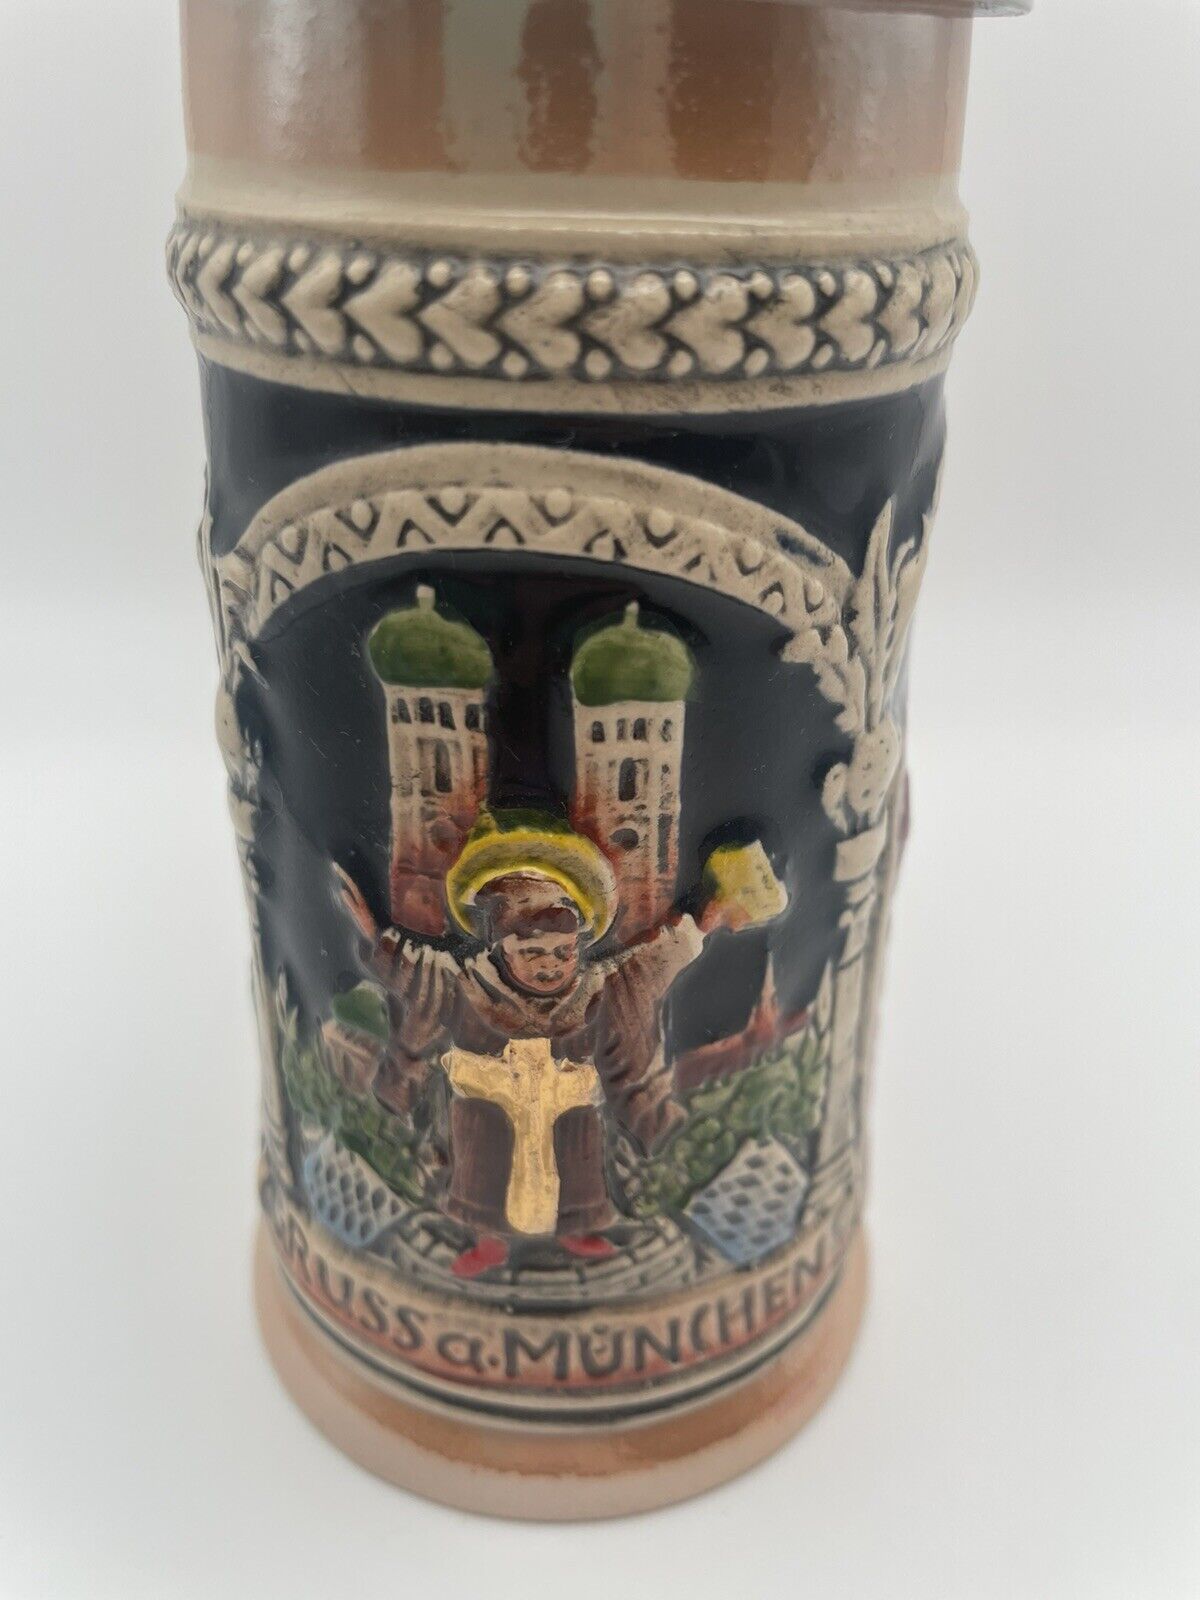 Vintage Munchen Hofbrauhaus German Beer Stein Mug Pewter Lid Excellent Condition